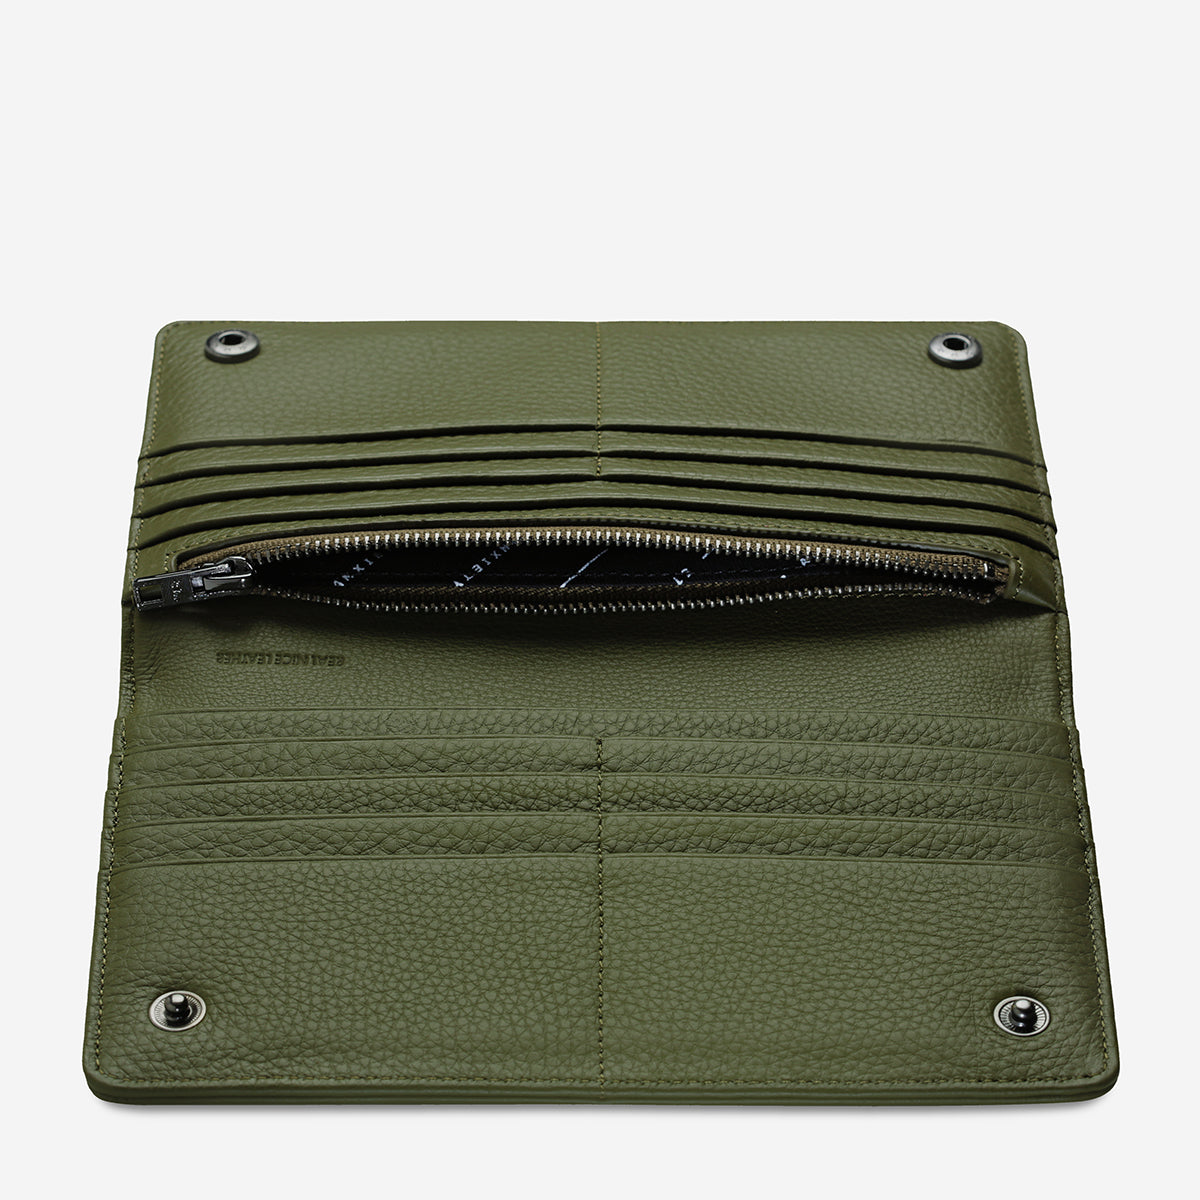 Living Proof Leather Wallet - Khaki